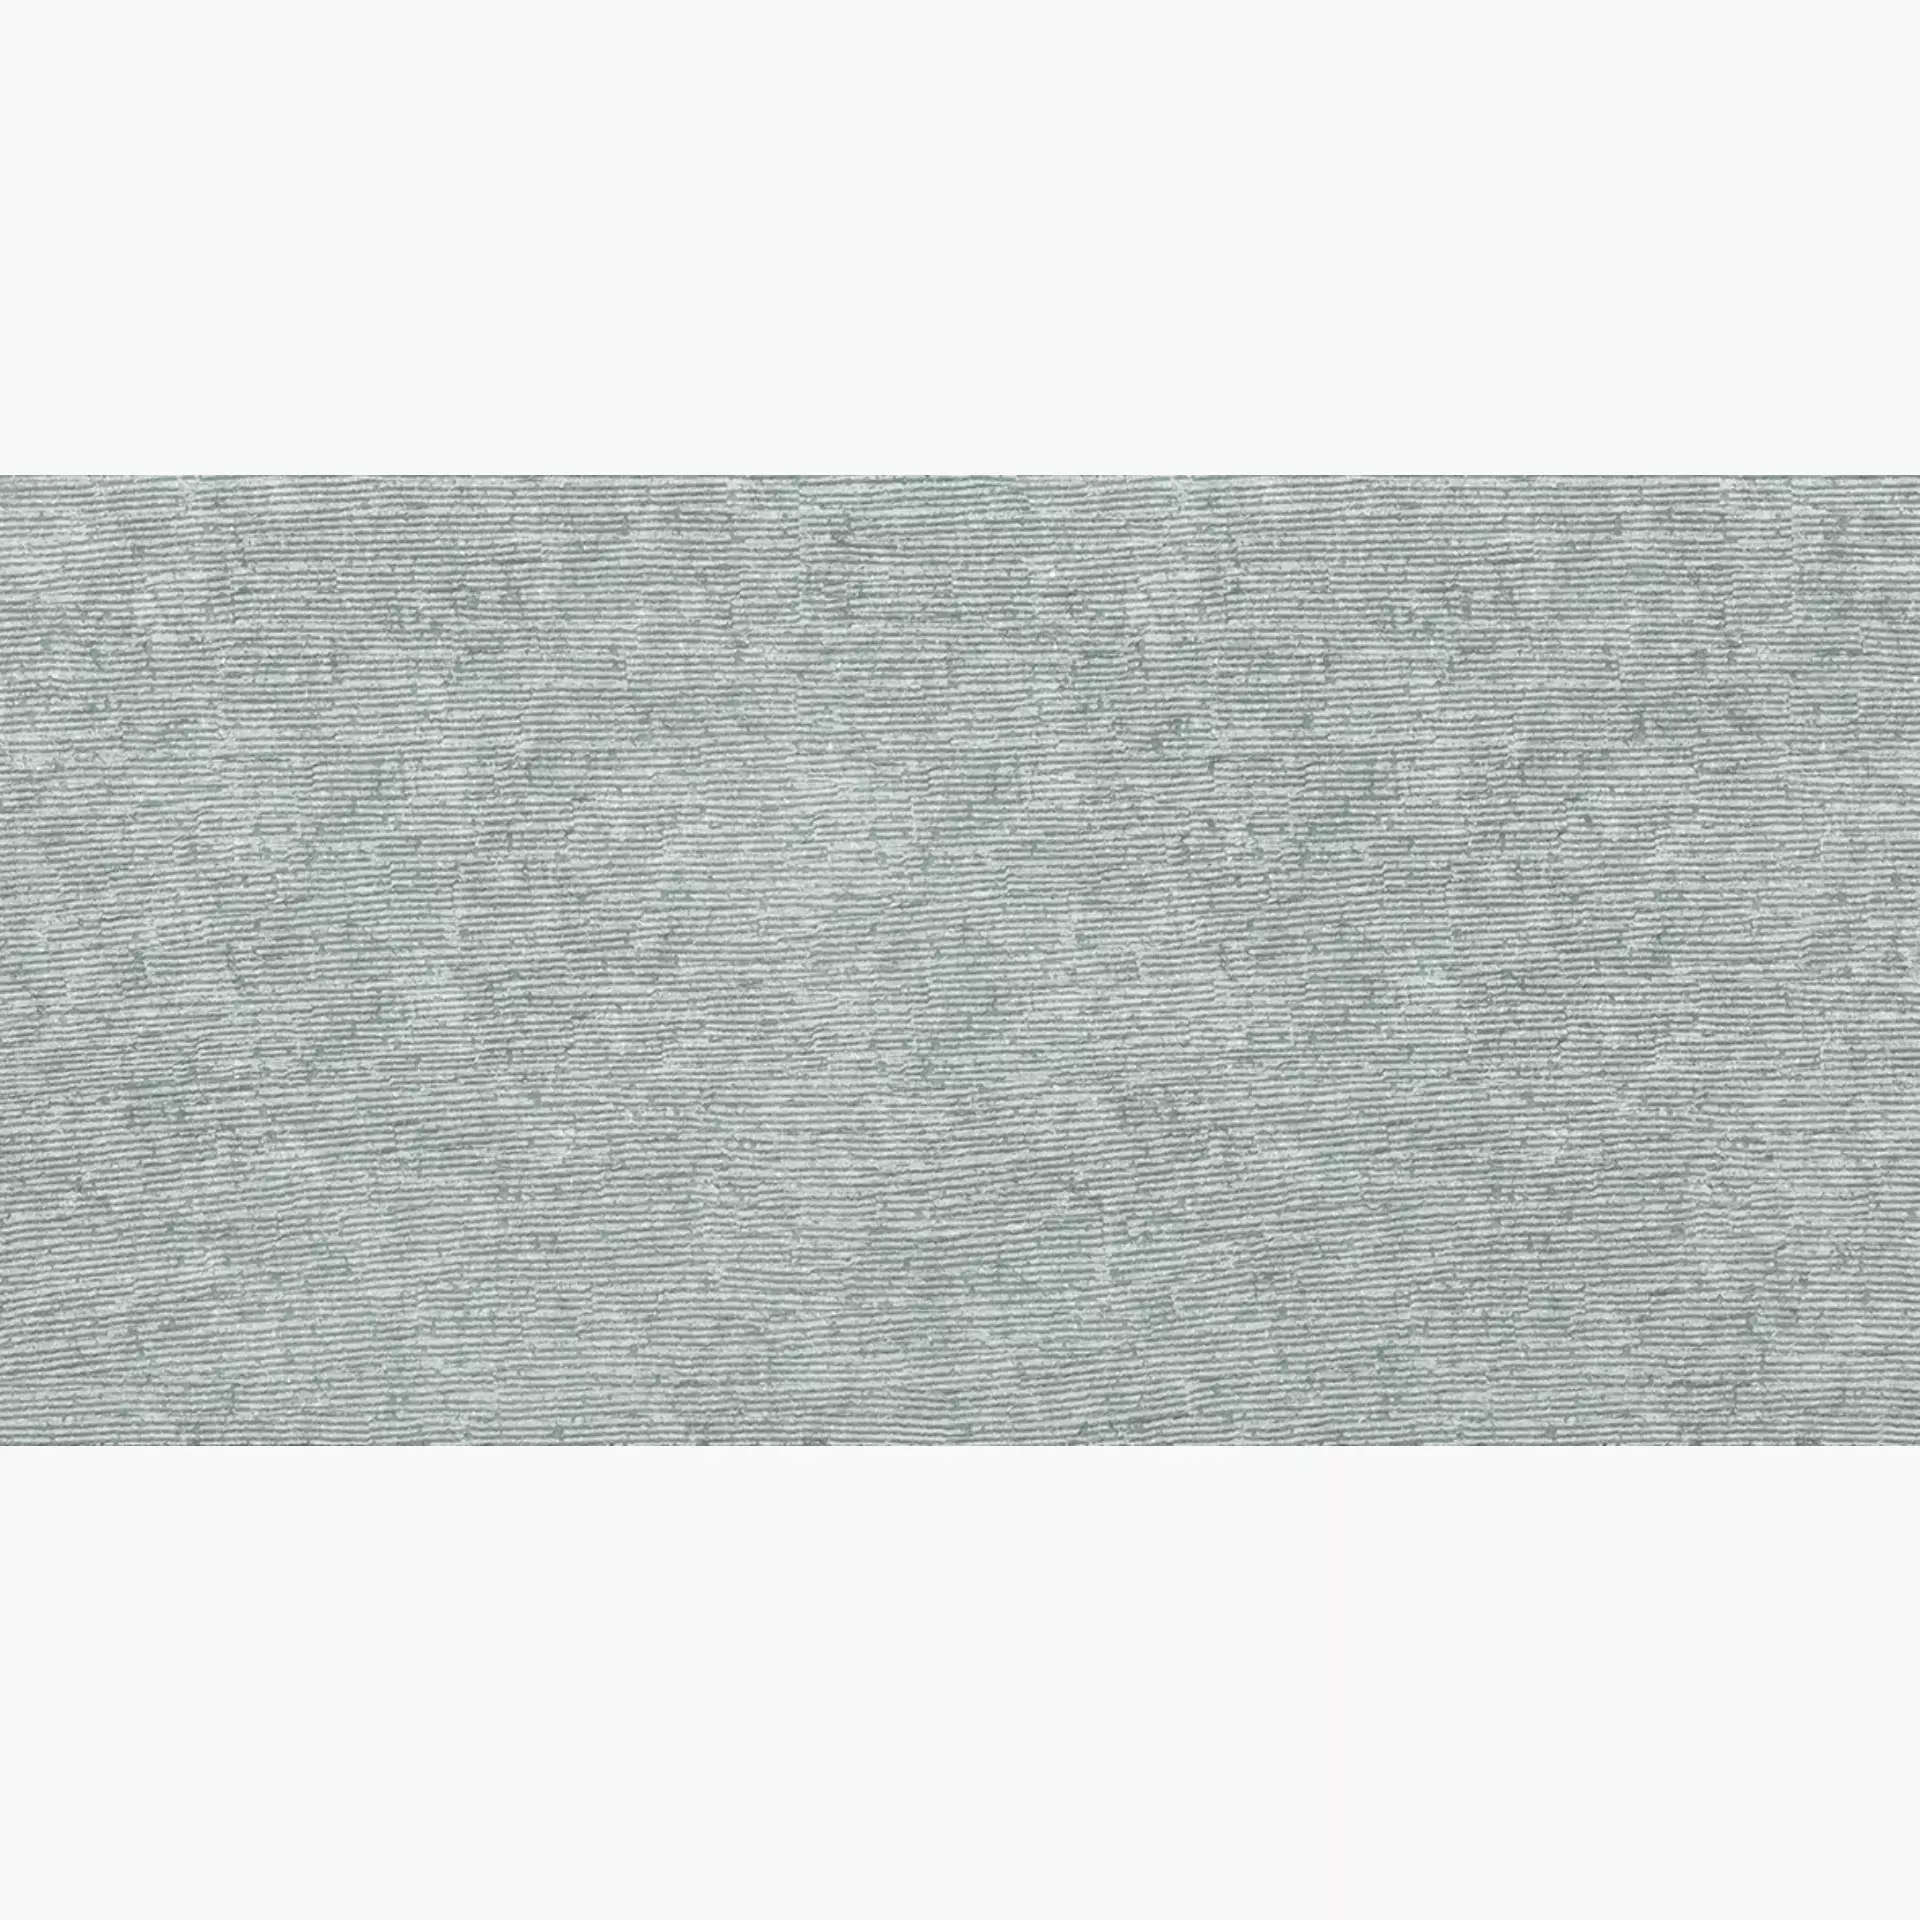 Ergon Stone Talk Rullata Grey Naturale ED5V 60x120cm rectified 9,5mm